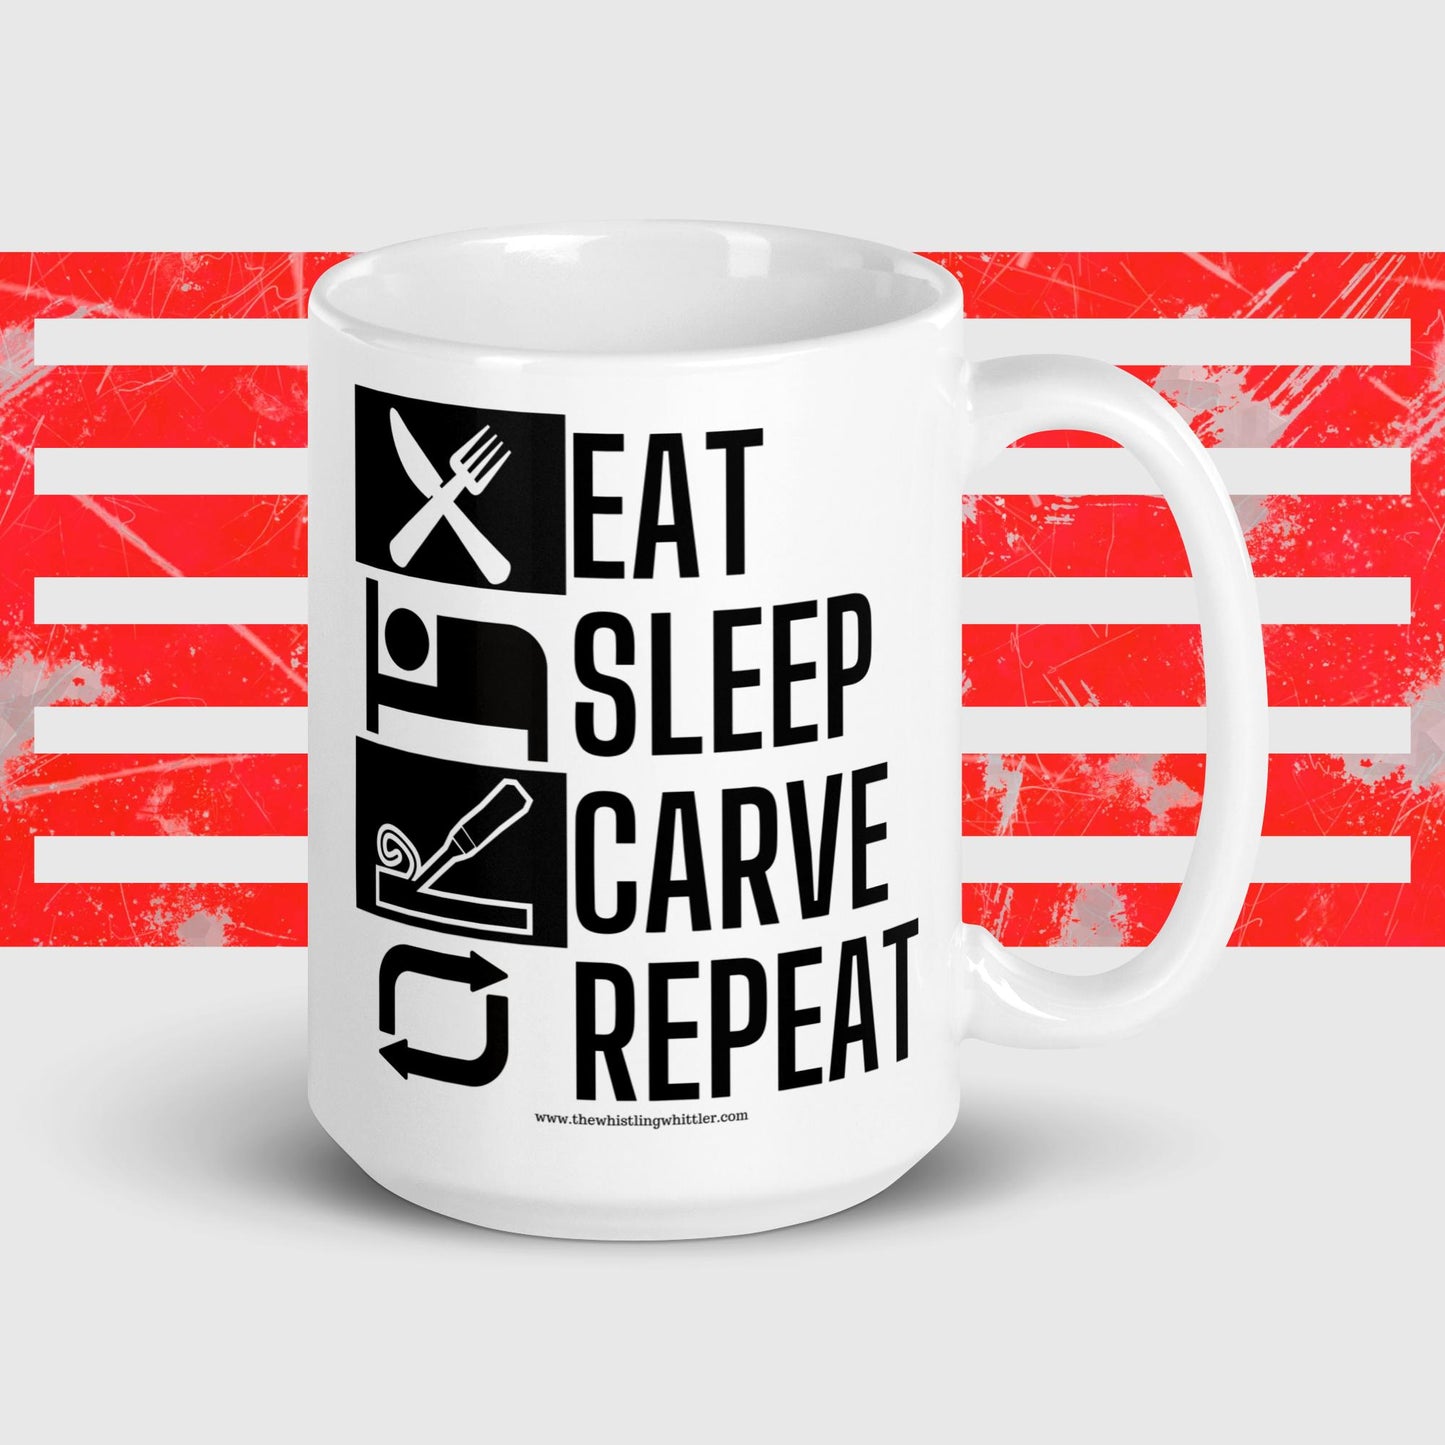 Eat, Sleep, Carve White glossy mug